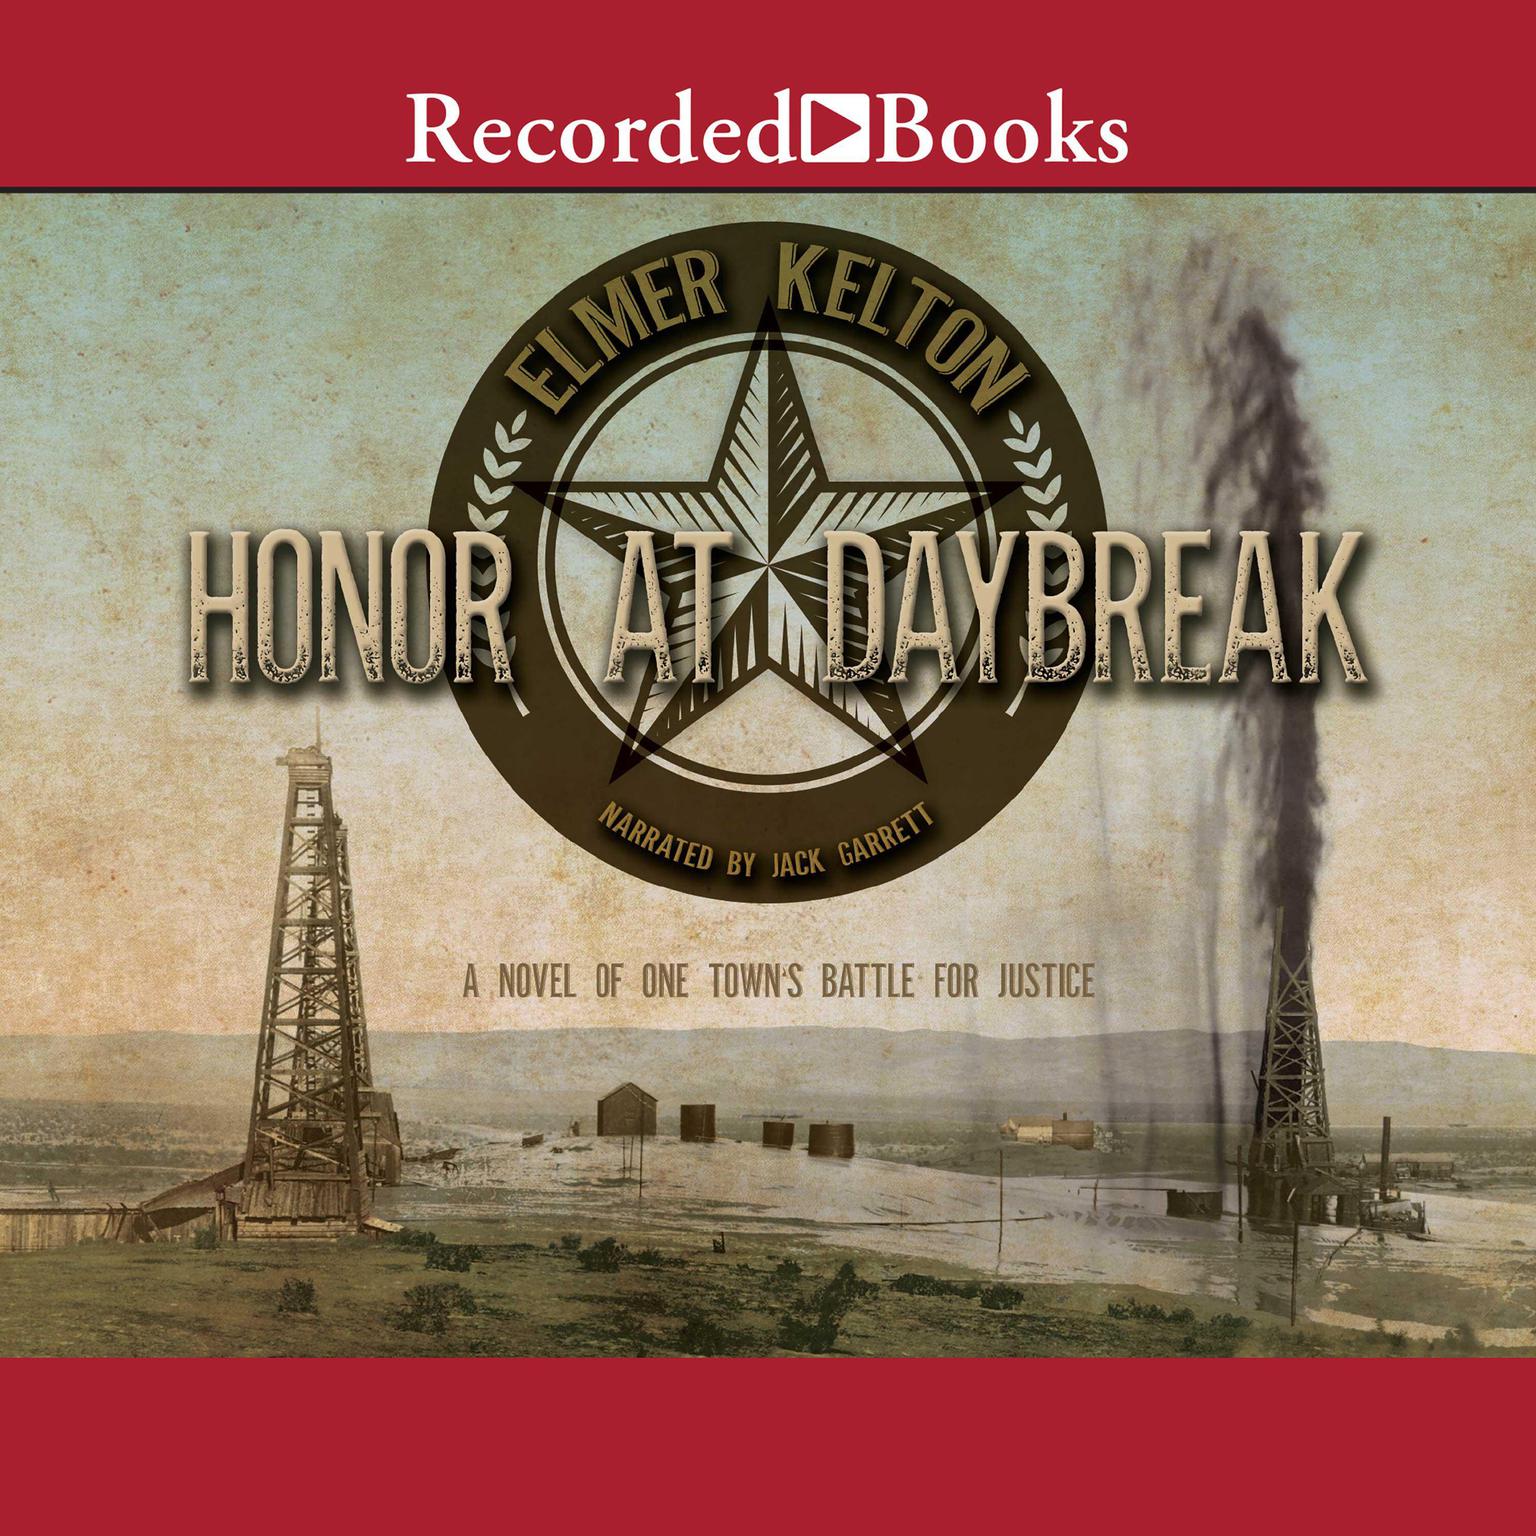 Honor at Daybreak Audiobook, by Elmer Kelton